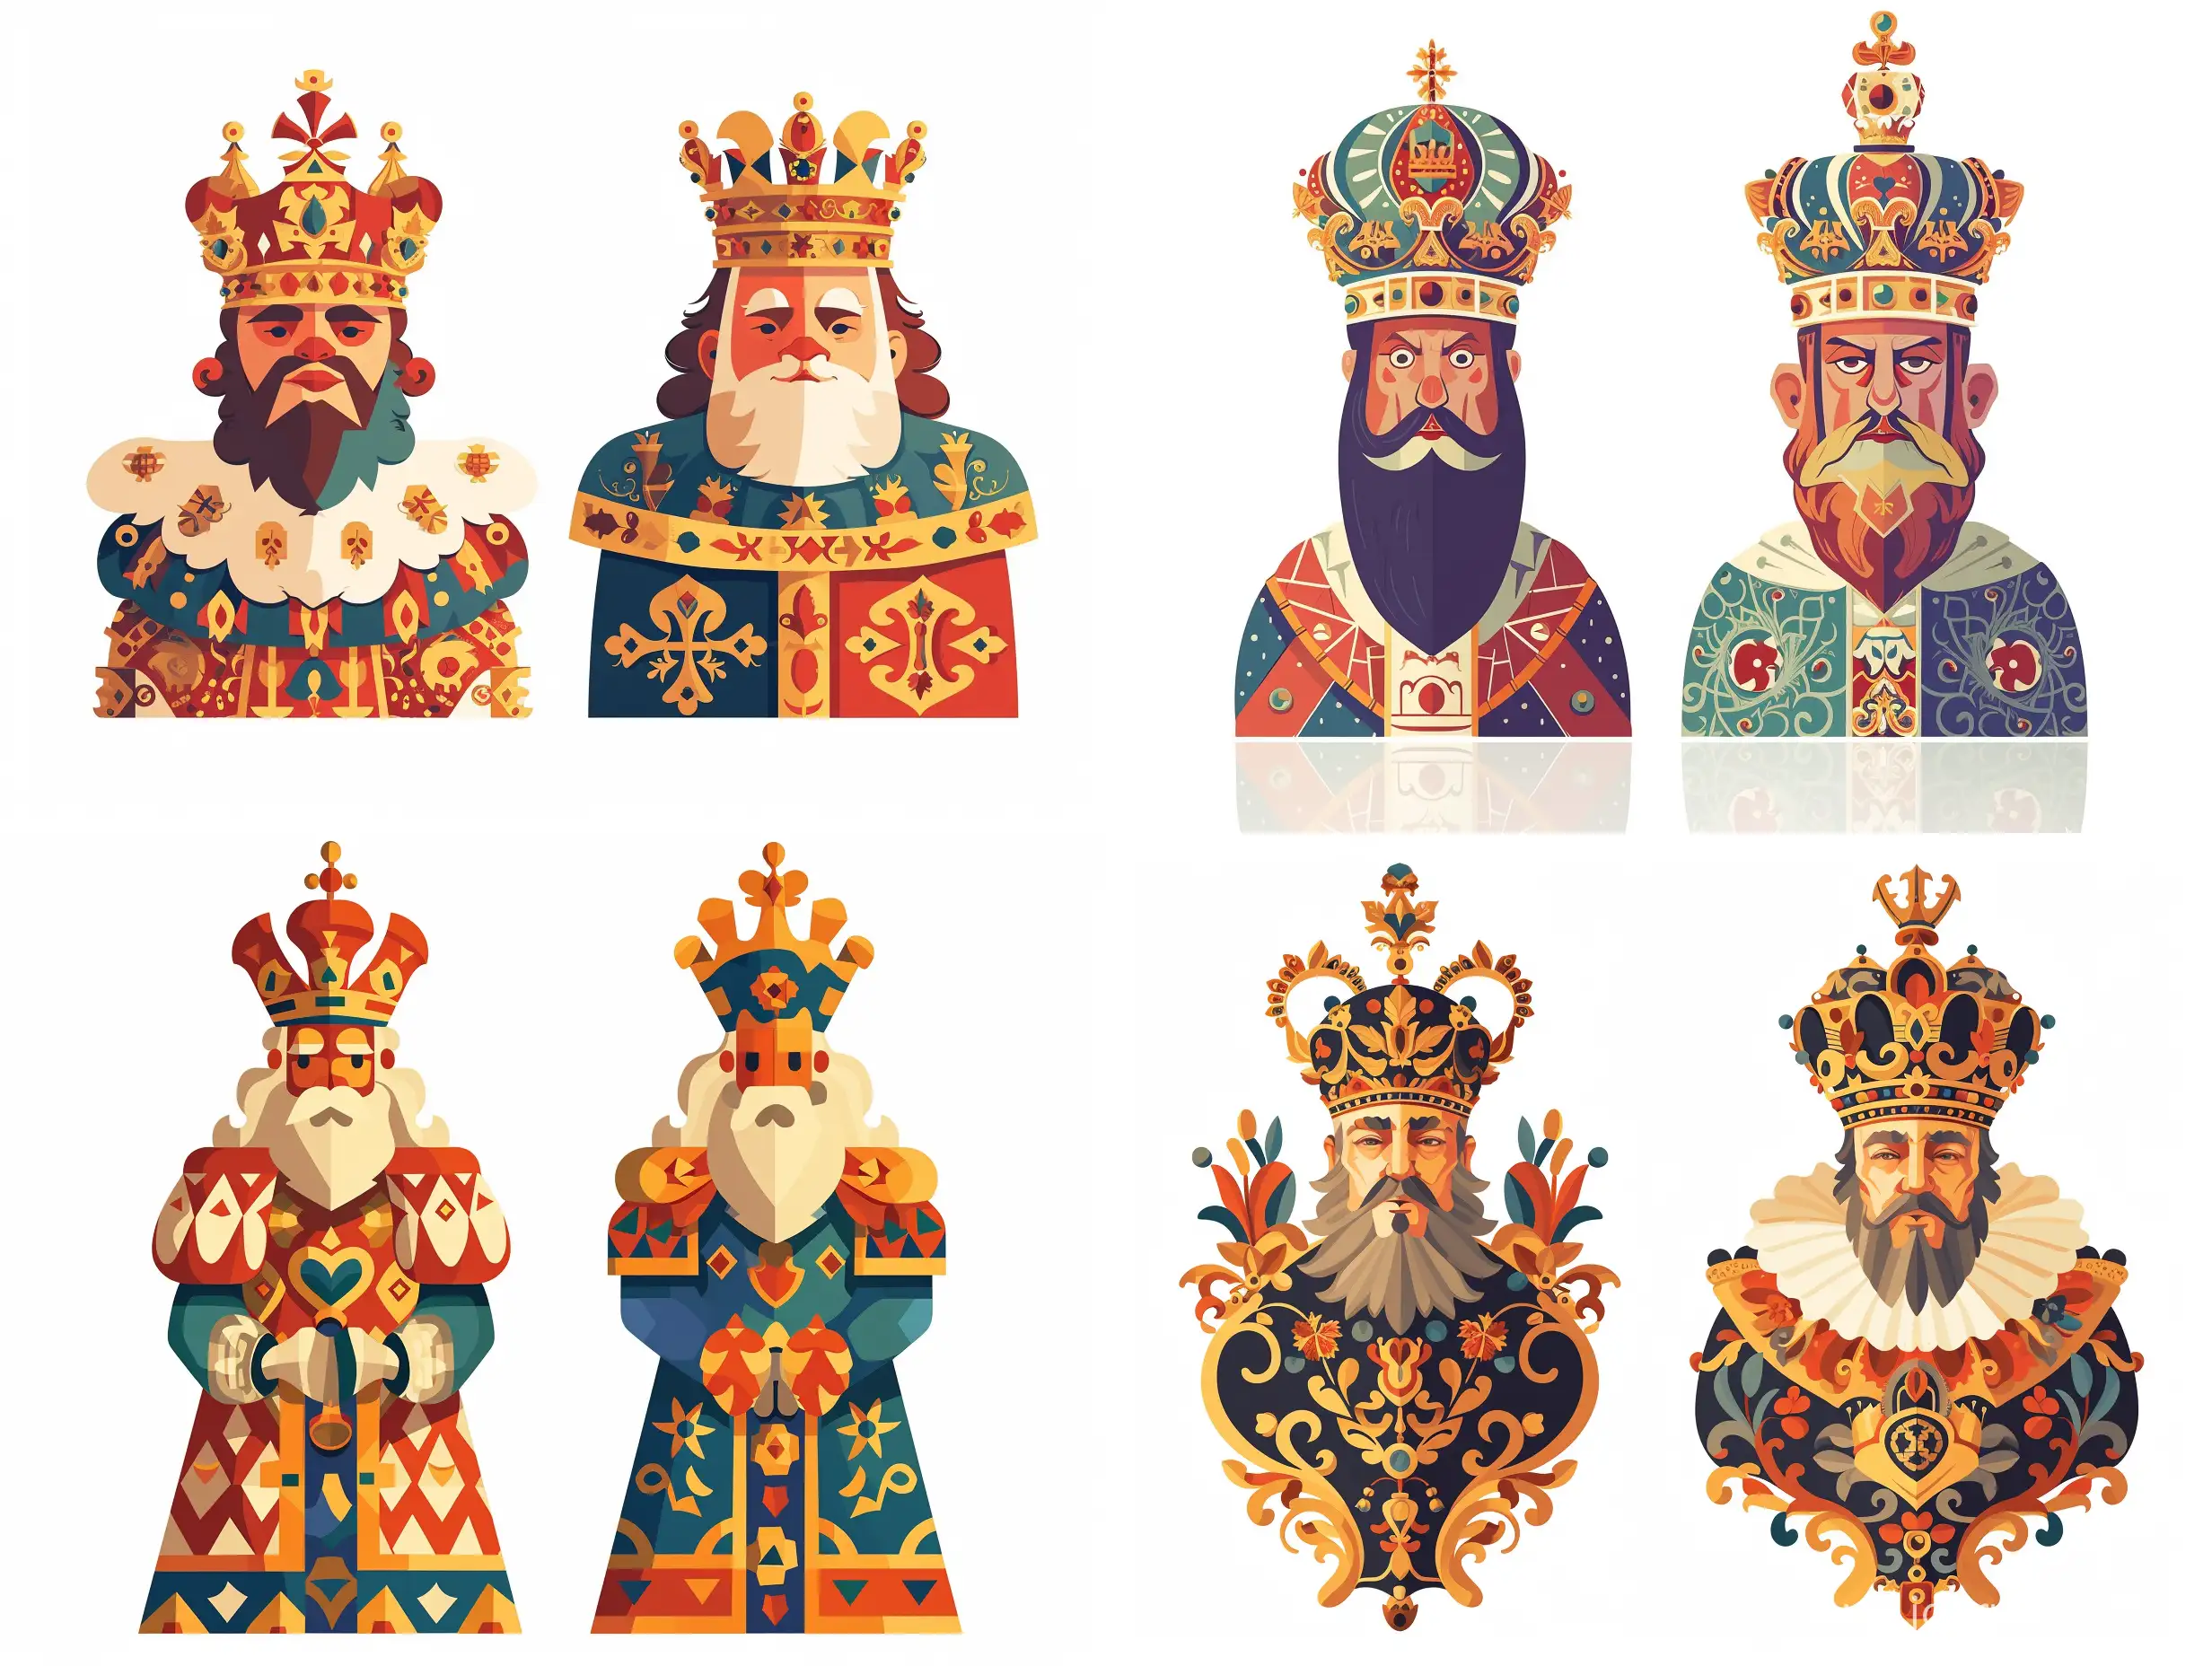 Renaissance-King-Ornament-Variants-Vertical-Reflection-Decorative-Flat-Illustration-on-White-Background